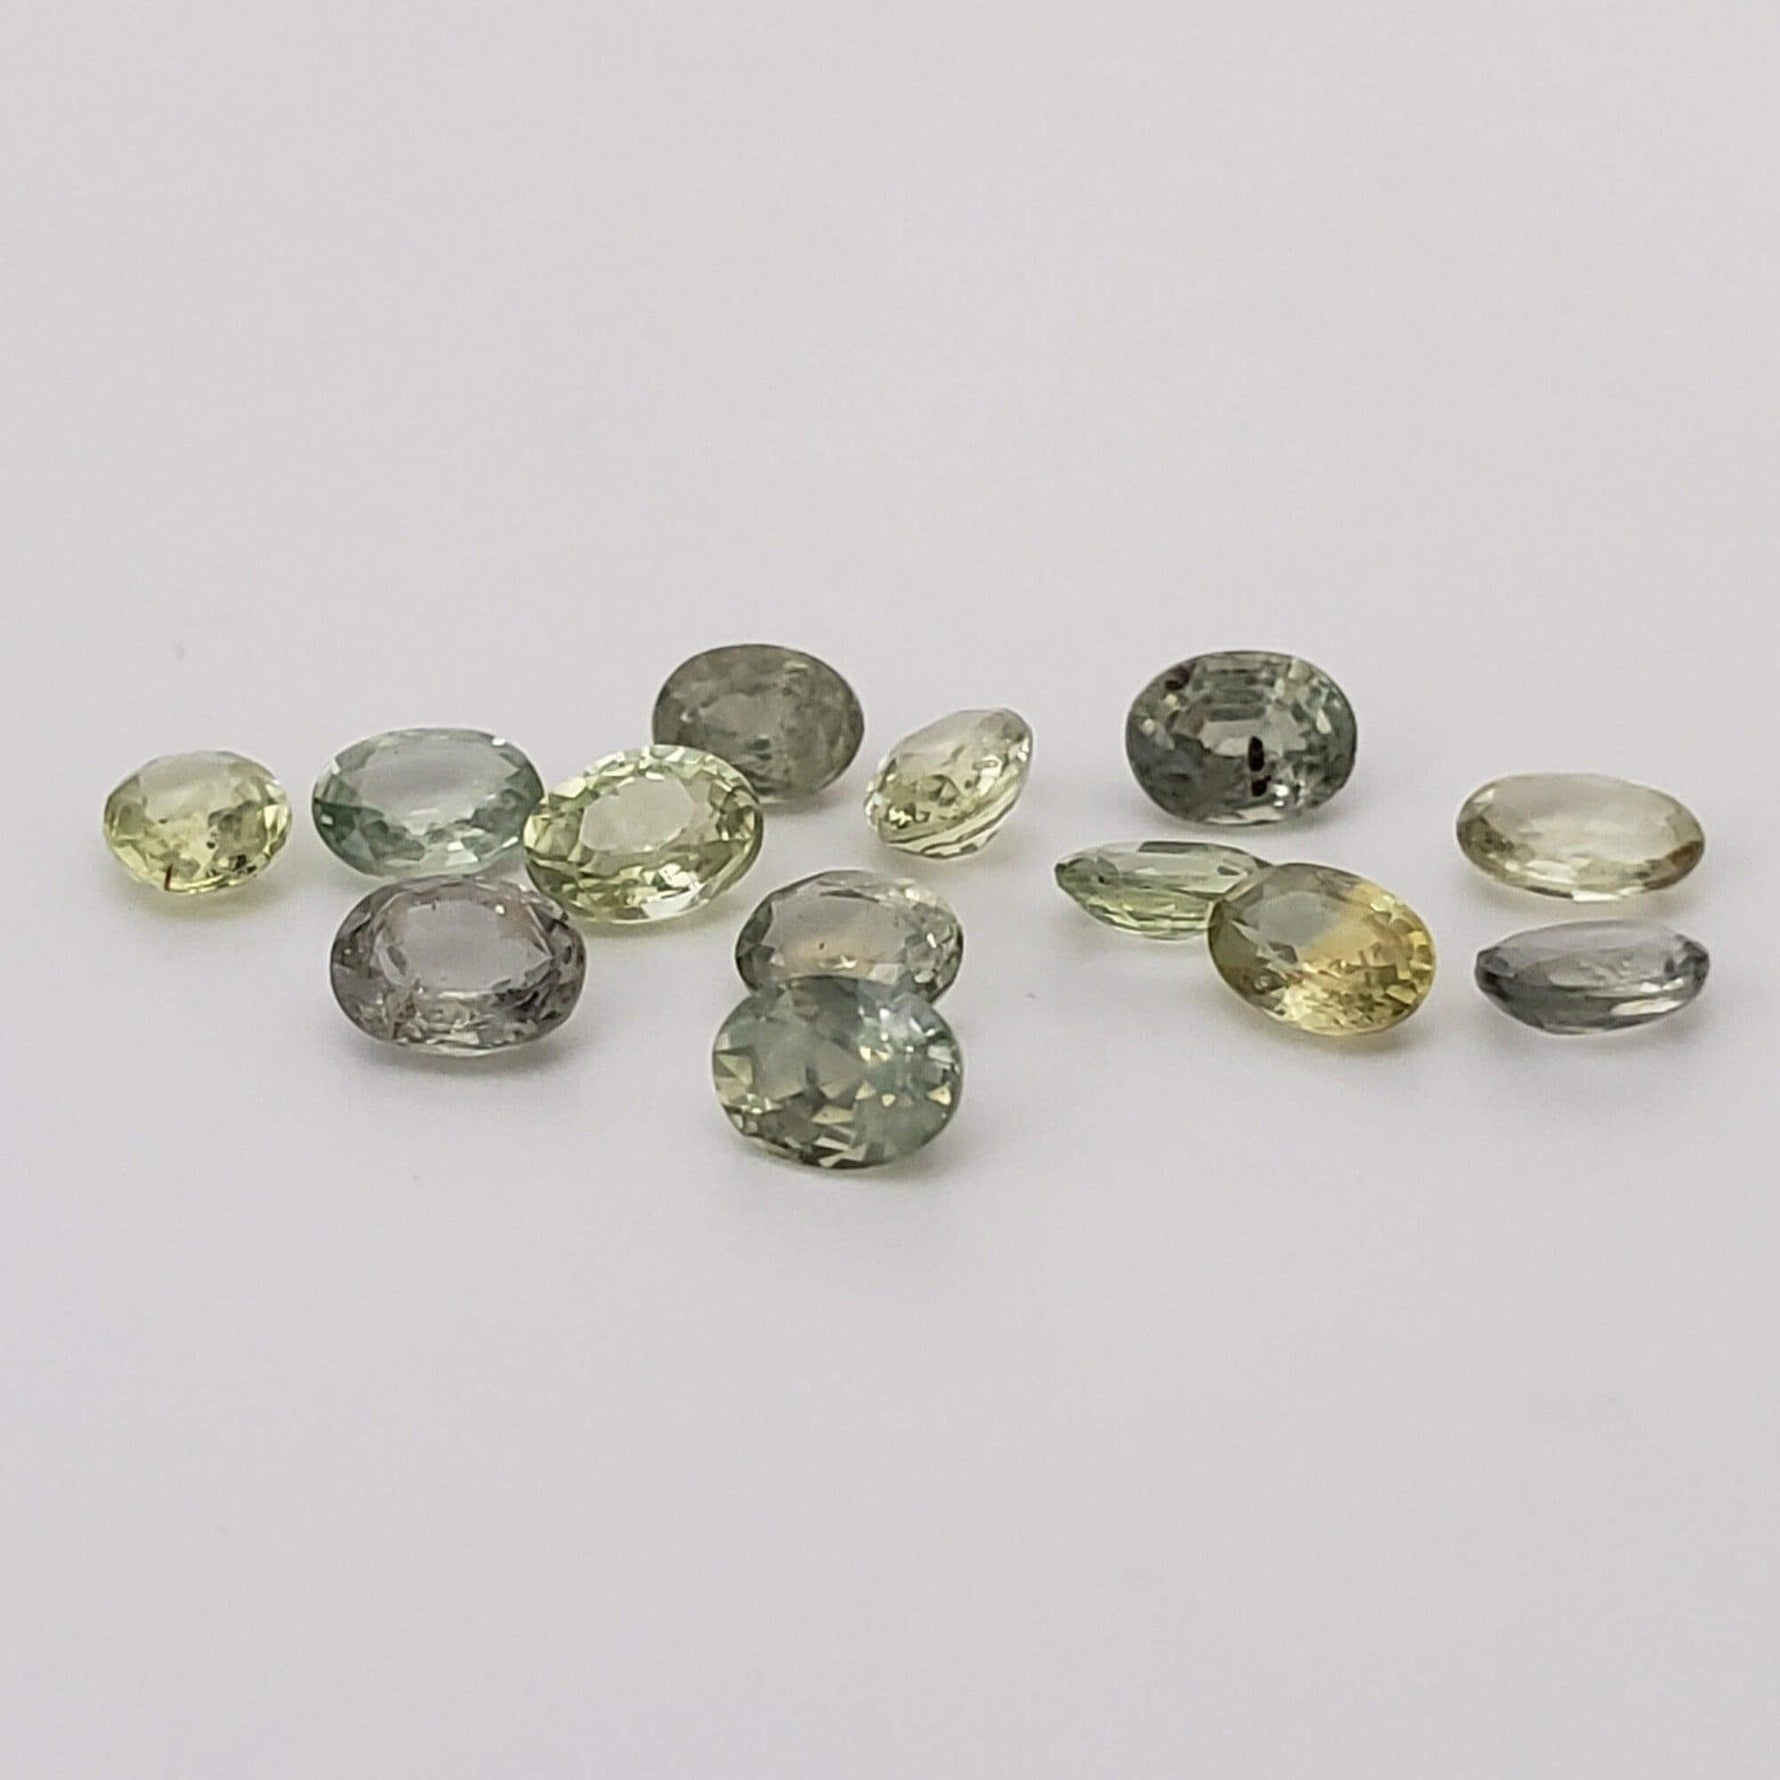 Sapphire | 13 Piece Gemstone Lot | Oval Cut | Green to Yellow | 3.6-4.0x2.6-3.0mm 2.8tcw